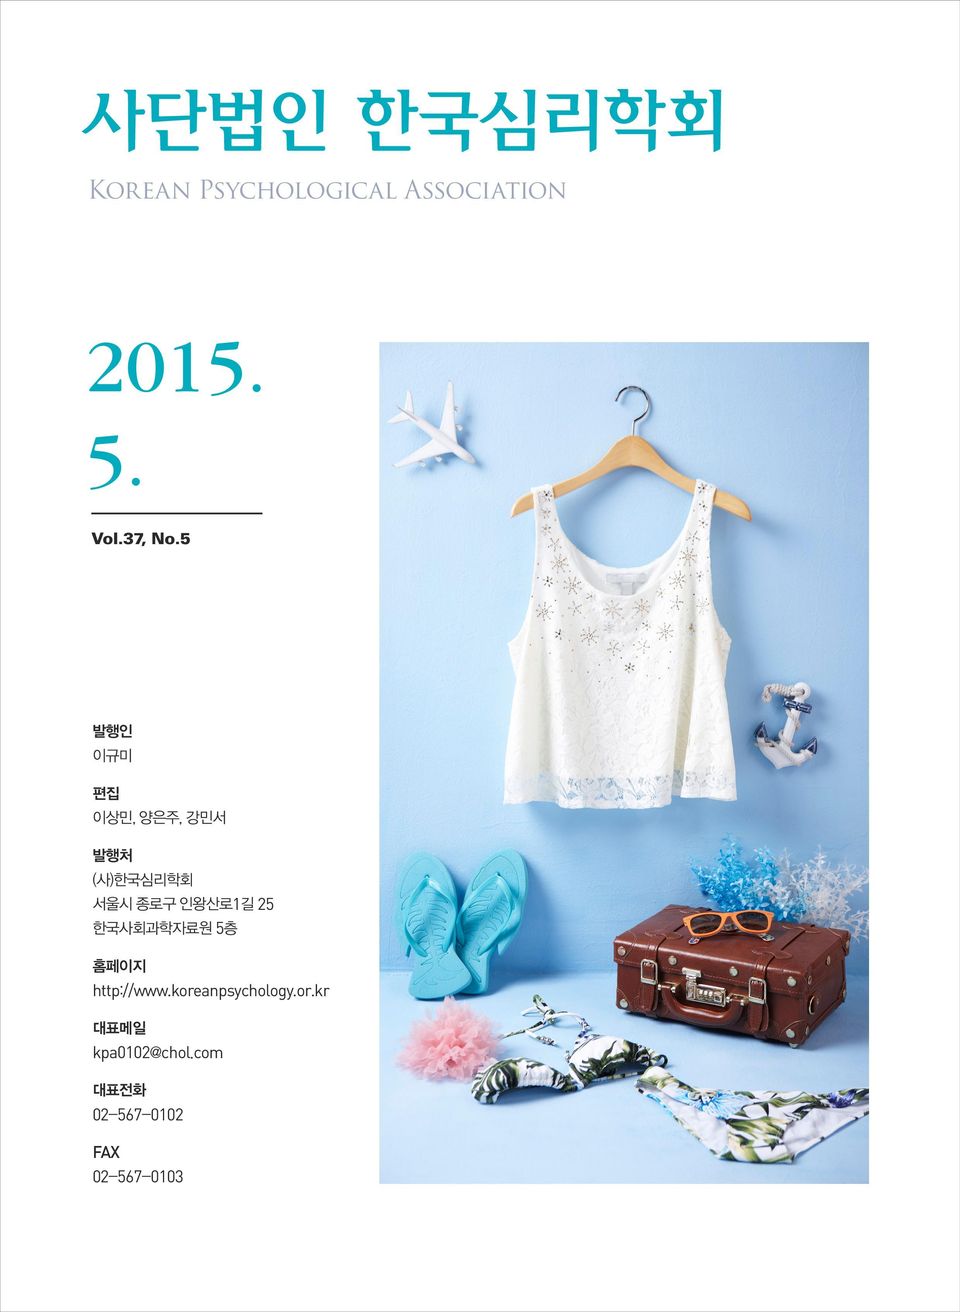 5 1 25 5 http //www koreanpsychology